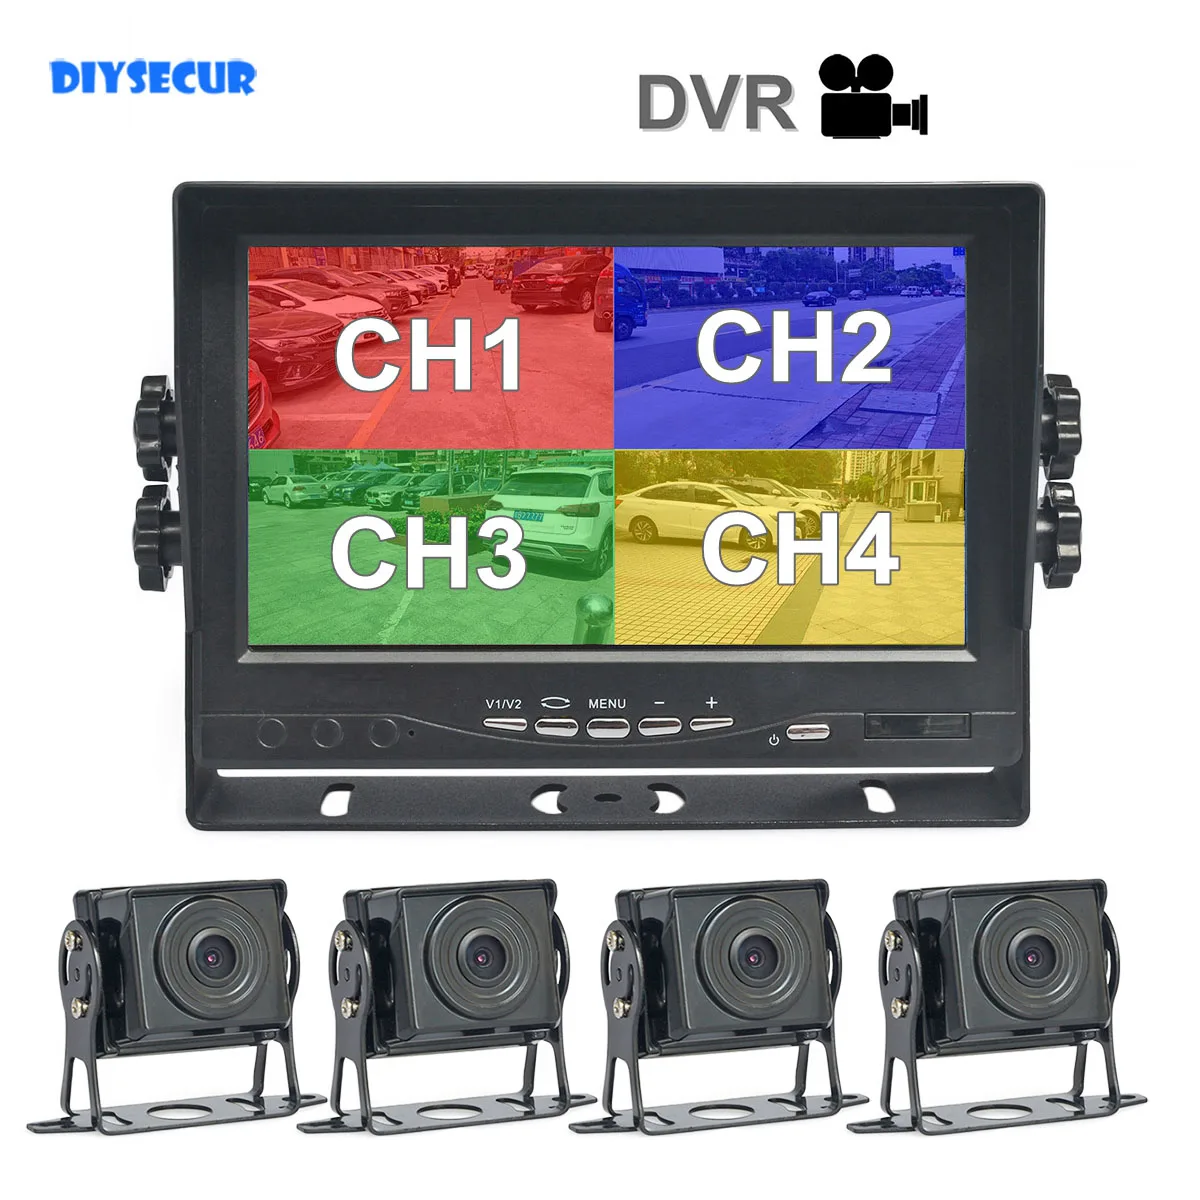 

DIYSECUR AHD 7" 4 Split QUAD Car HD Monitor 2000000 Pixels AHD Rear View Car Camera Waterproof with SD Card Video Recording